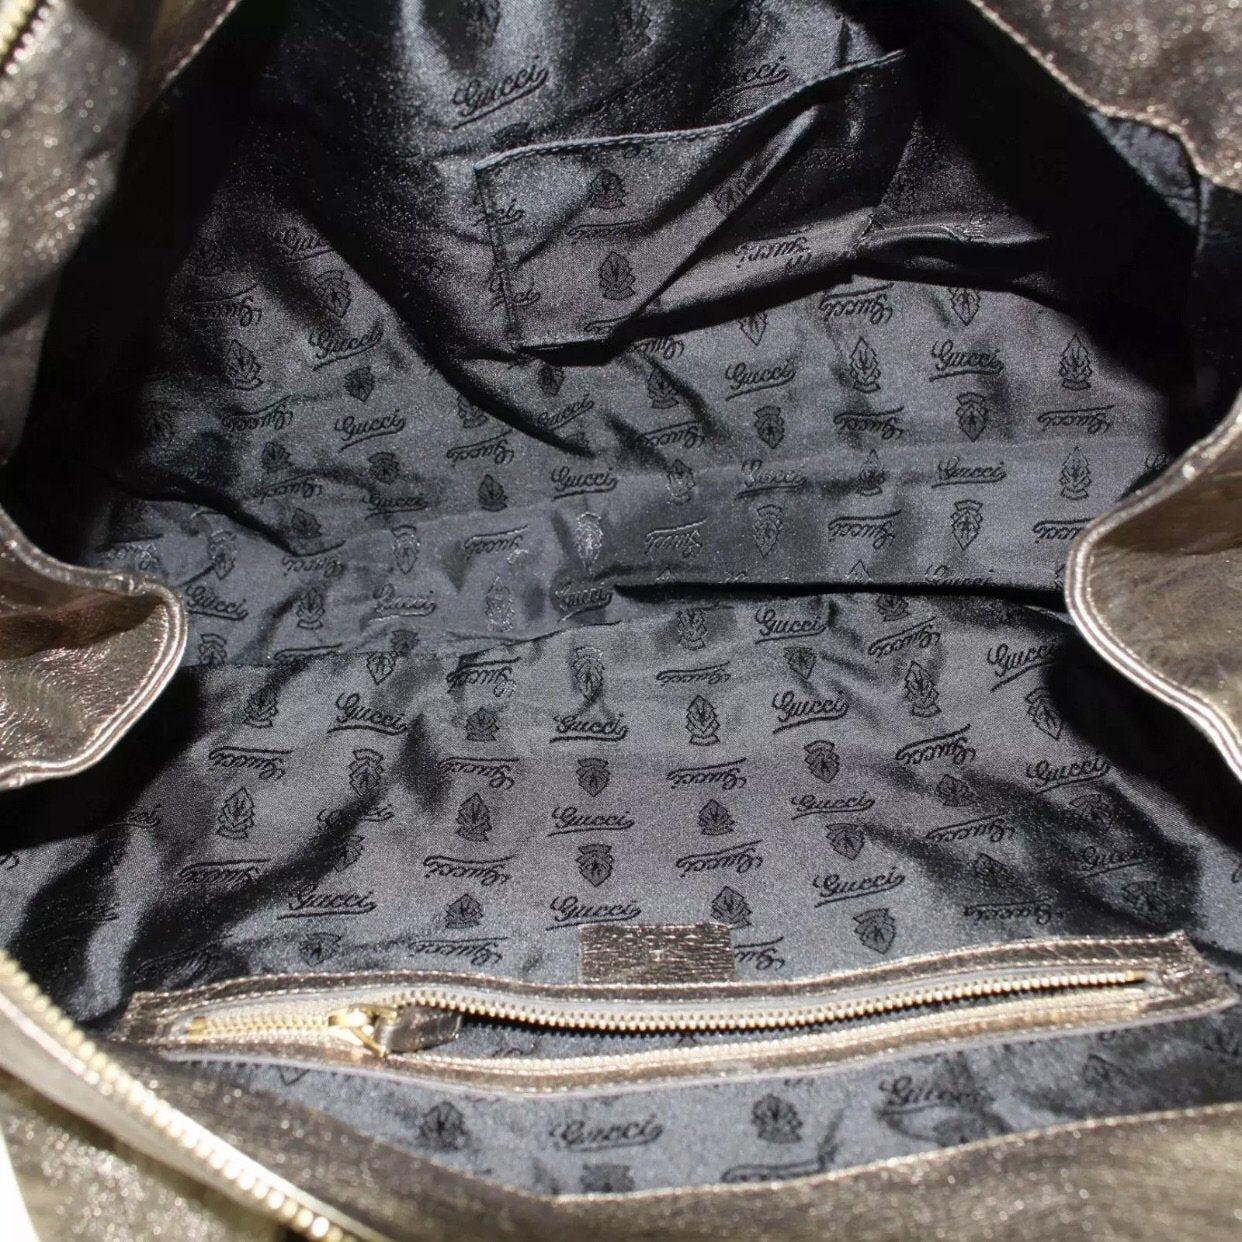 Gucci Bronze Metallic Coated Monogram Canvas Tote Bag. The